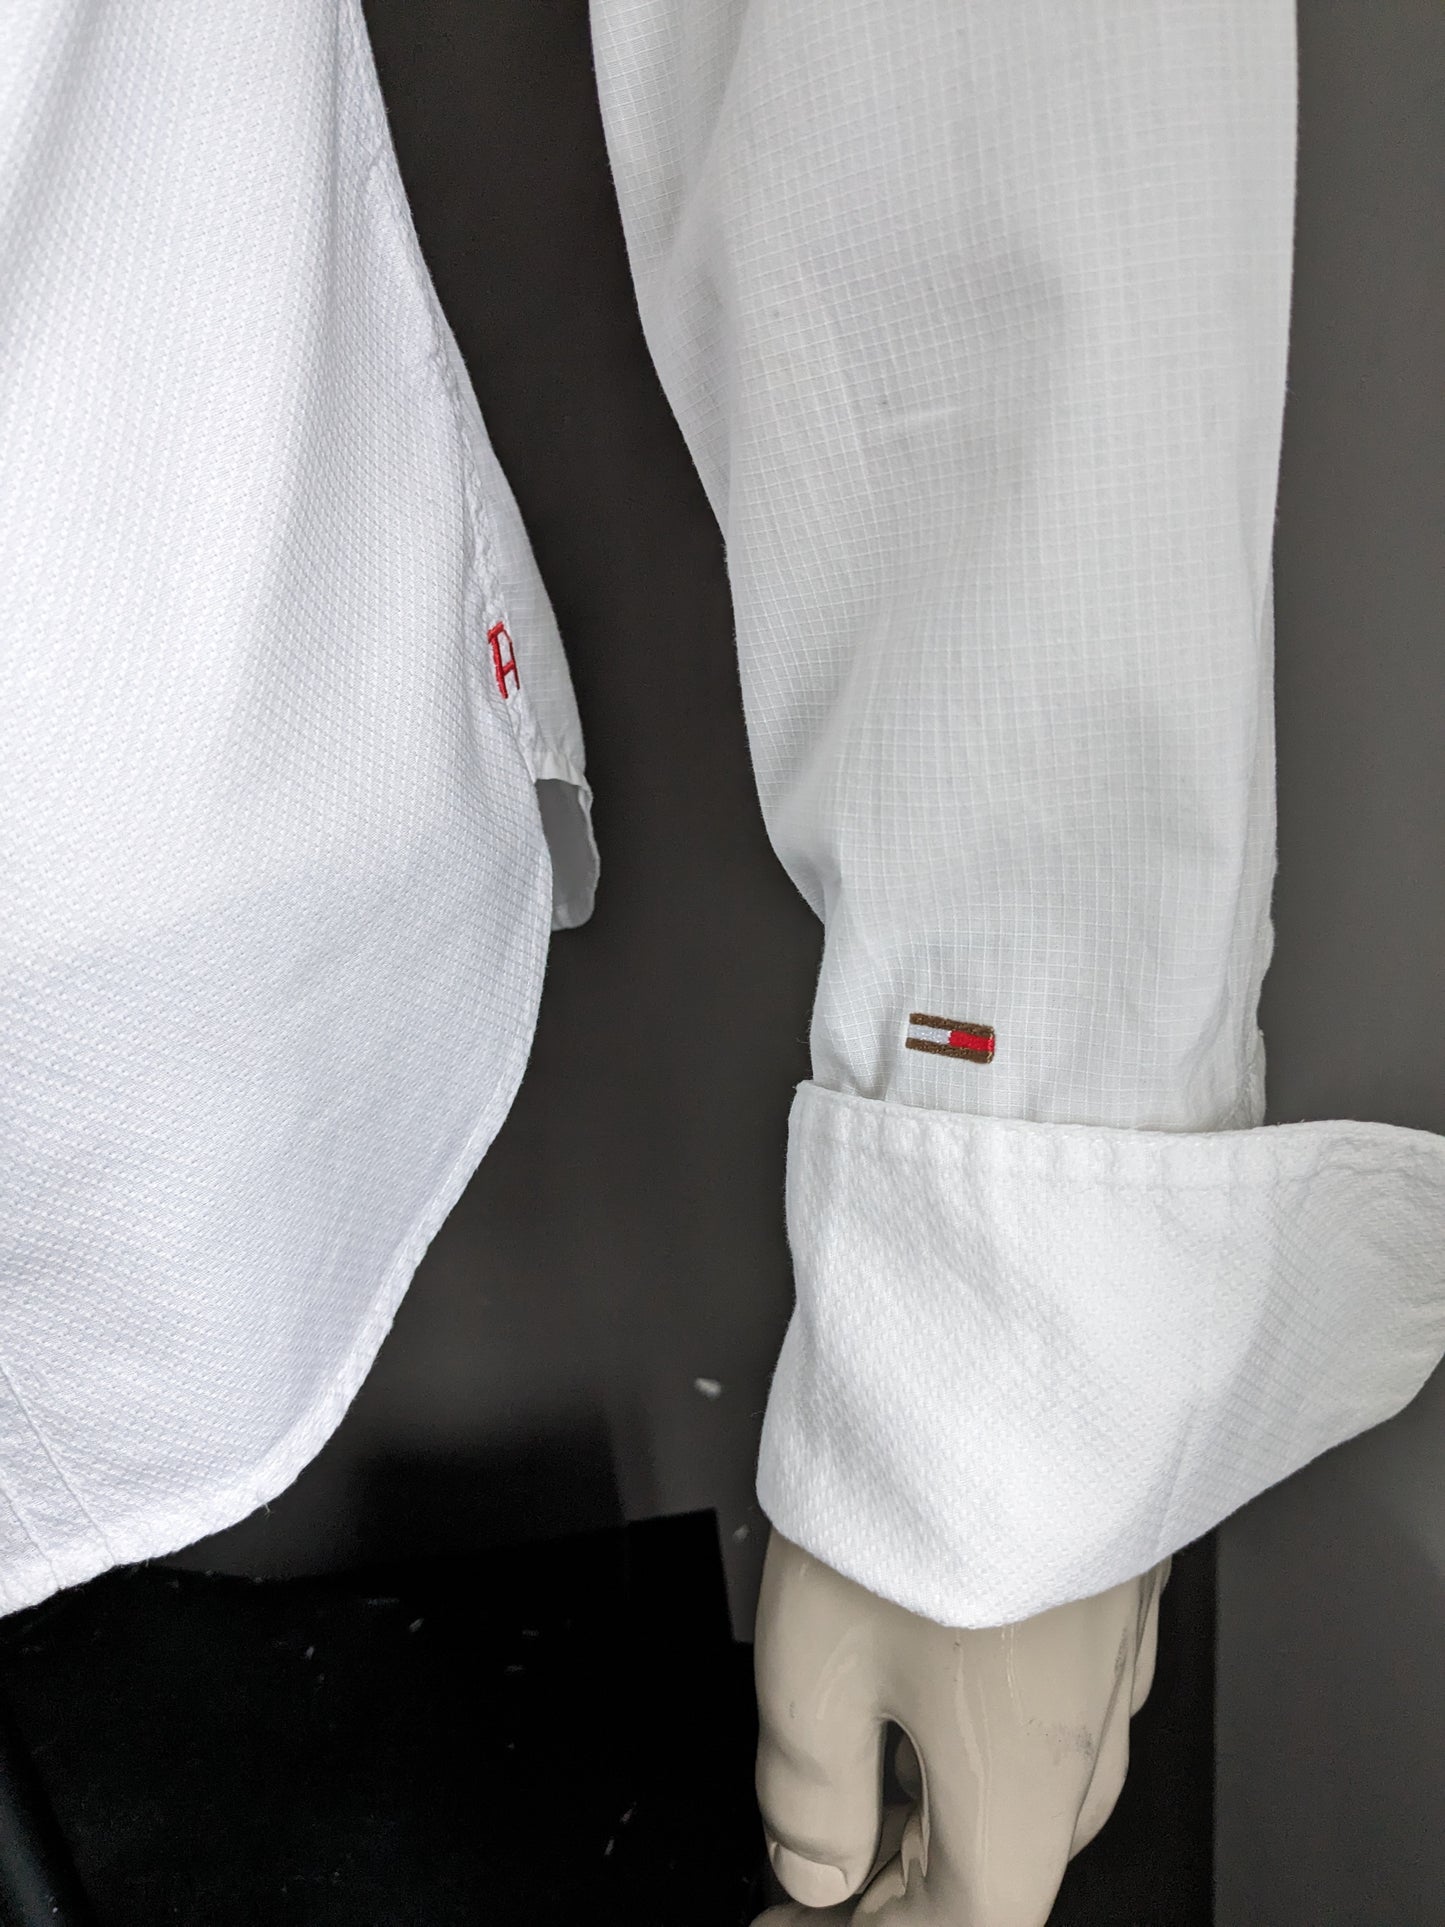 Hilfiger Denim shirt with Mao / Standing Collar. White. Size L.